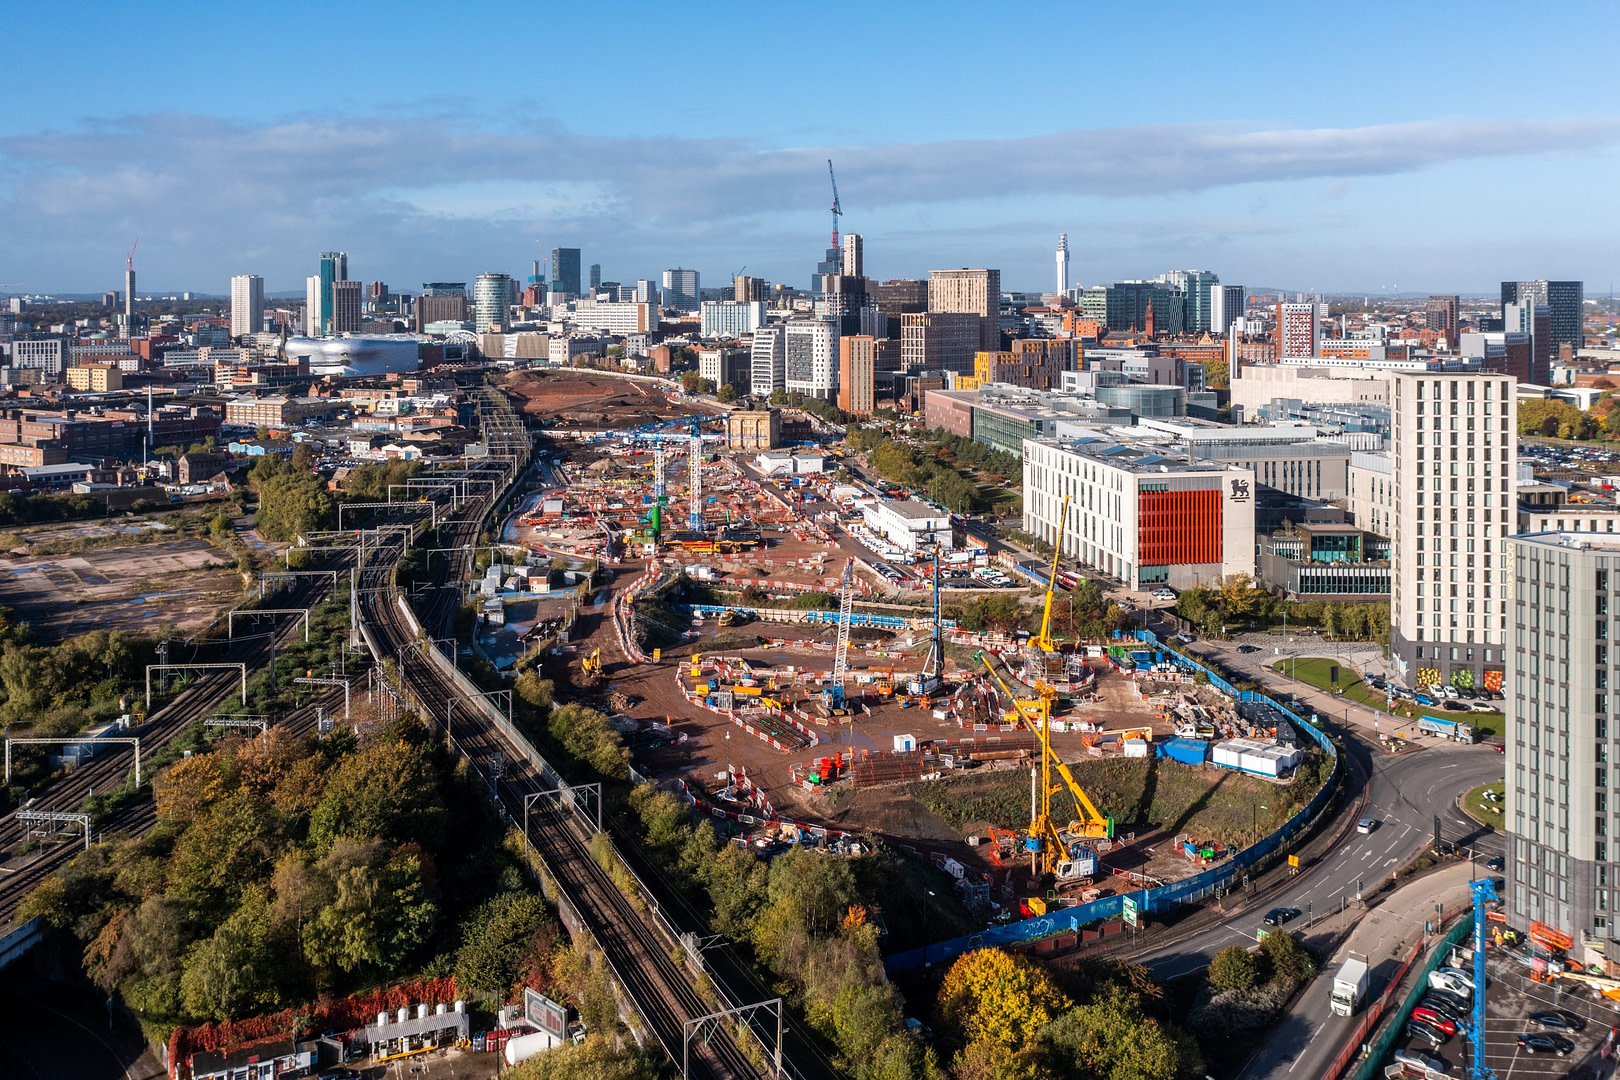 Five Ways Birmingham Transport Links